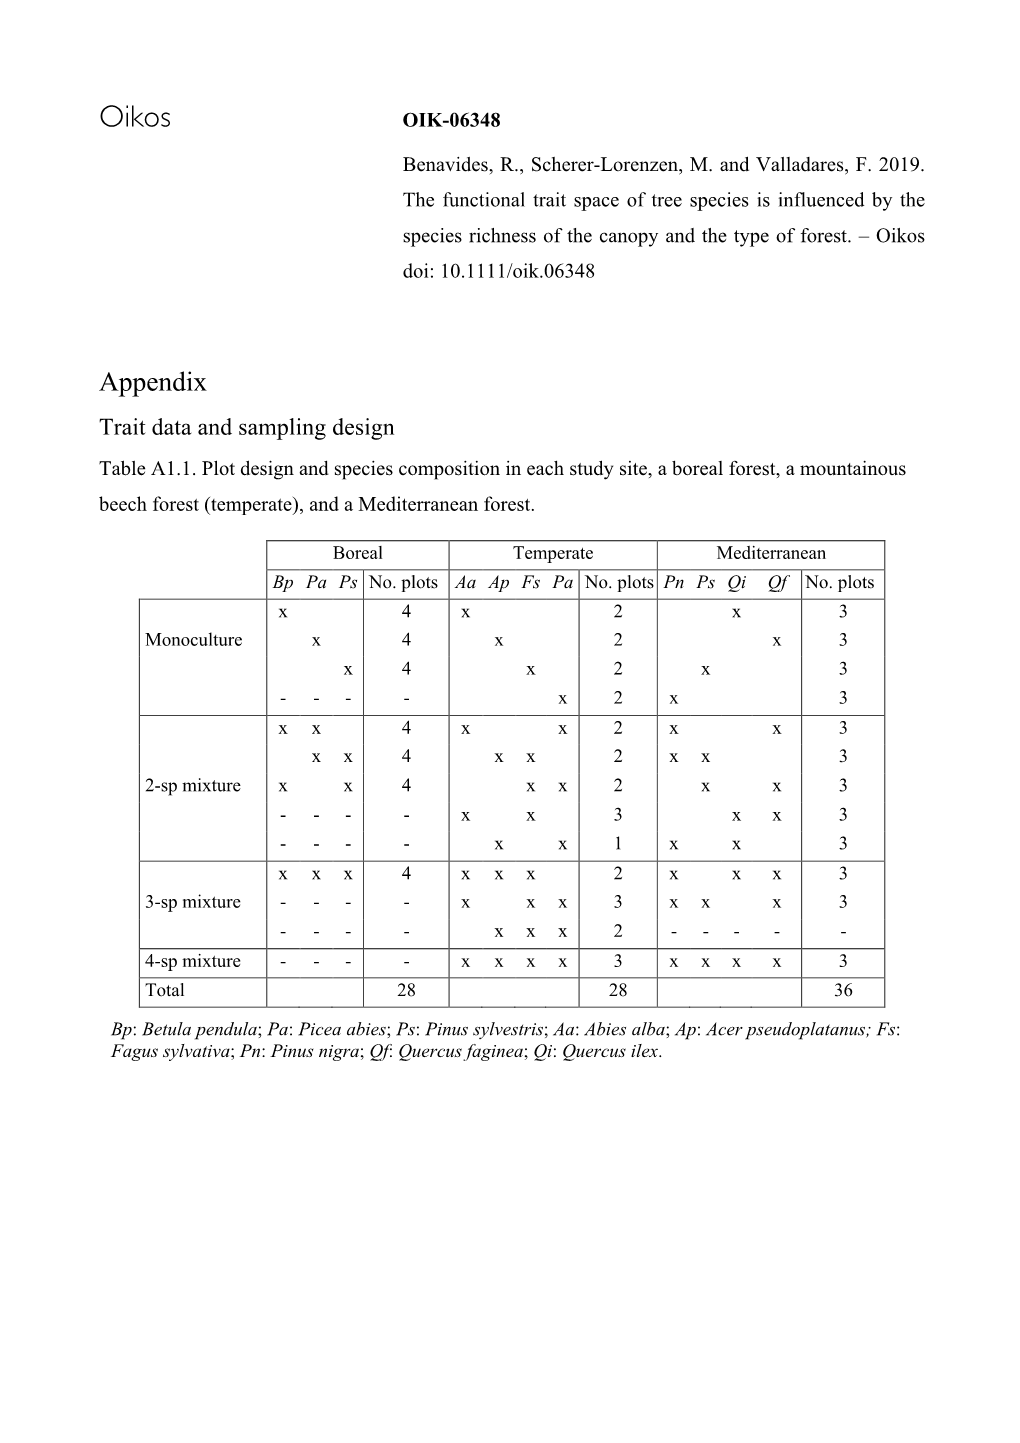 Appendix Trait Data and Sampling Design Table A1.1